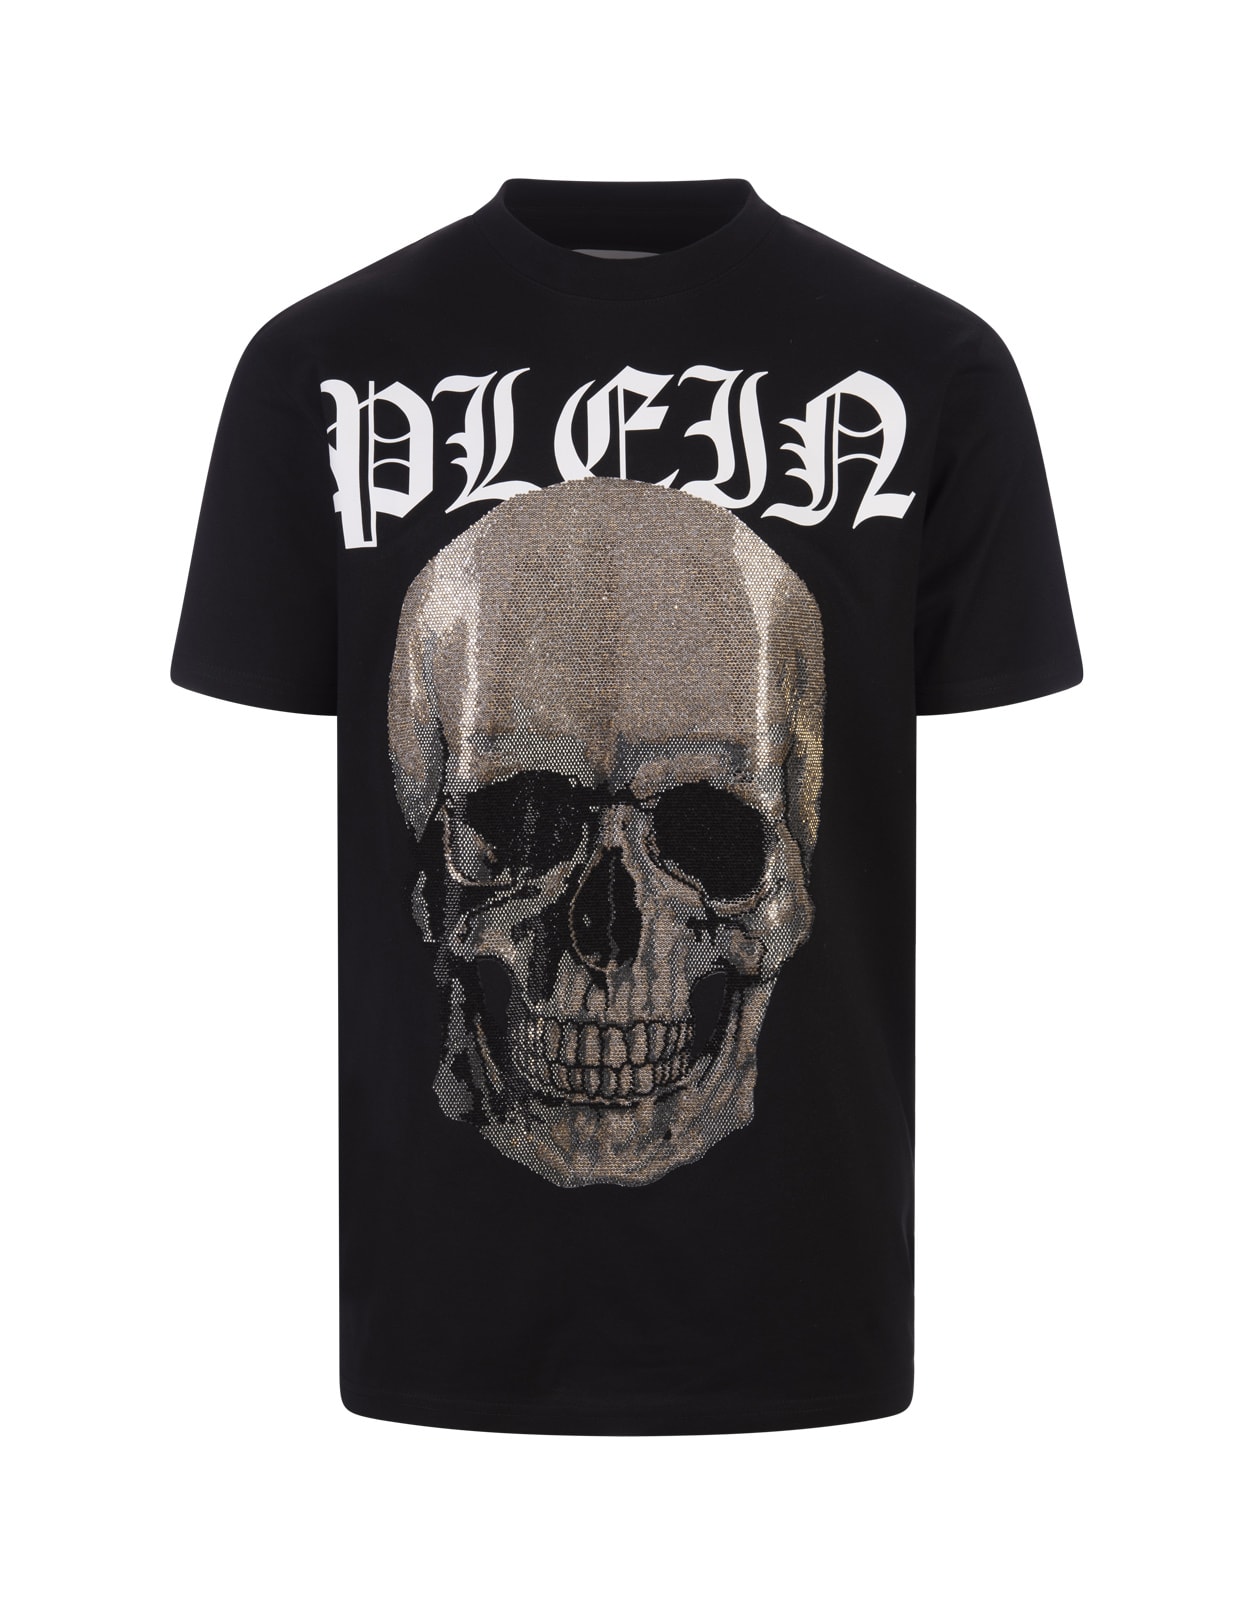 Philipp Plein Black T-shirt With Crystals Skull